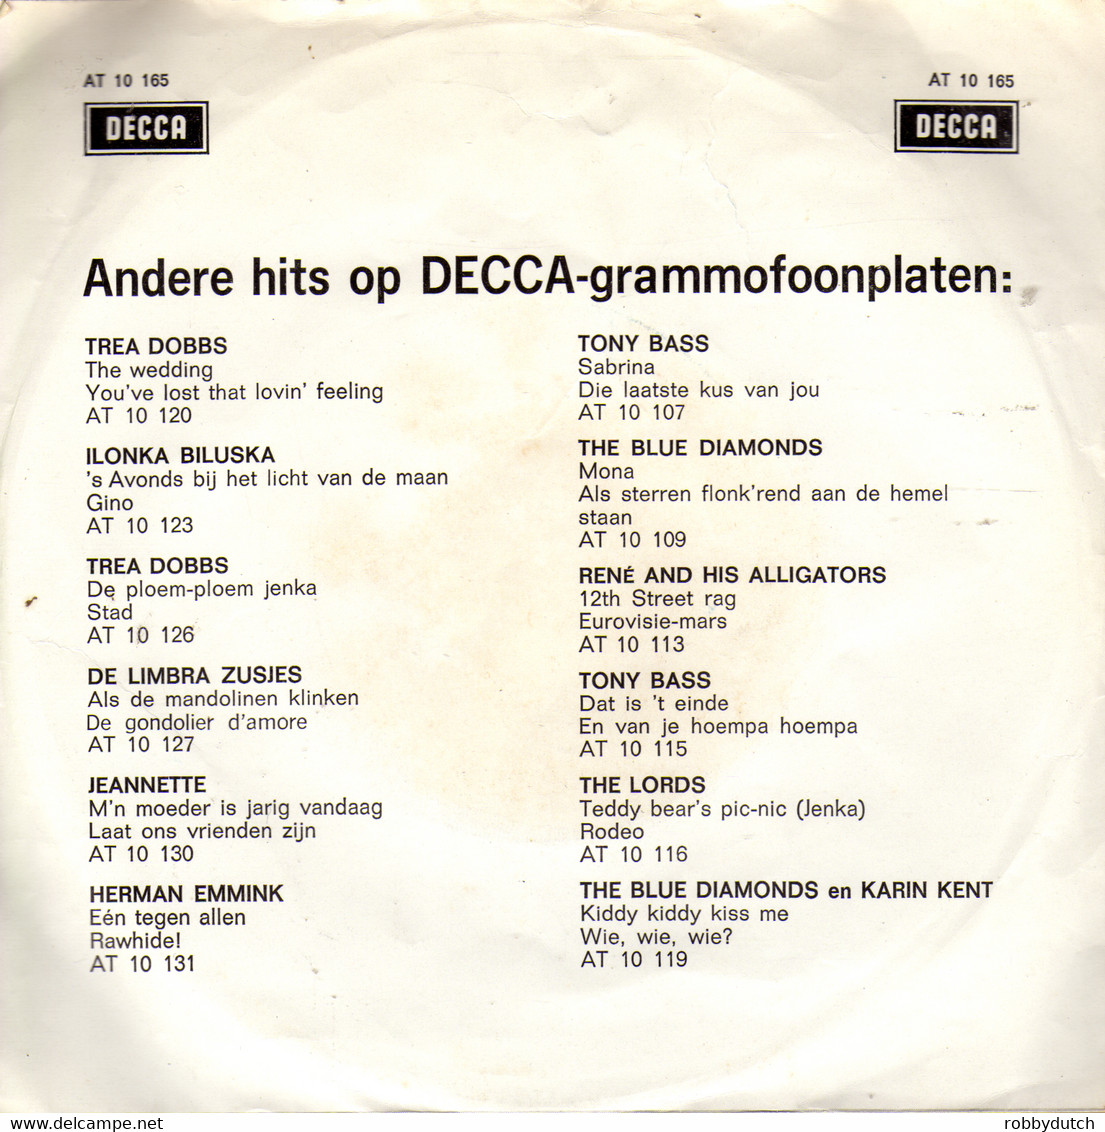 * 7" *  TREA DOBBS - KIJK MAAR NIET OM / TRANEN OM JOU (Holland 1965 EX-!!) - Otros - Canción Neerlandesa